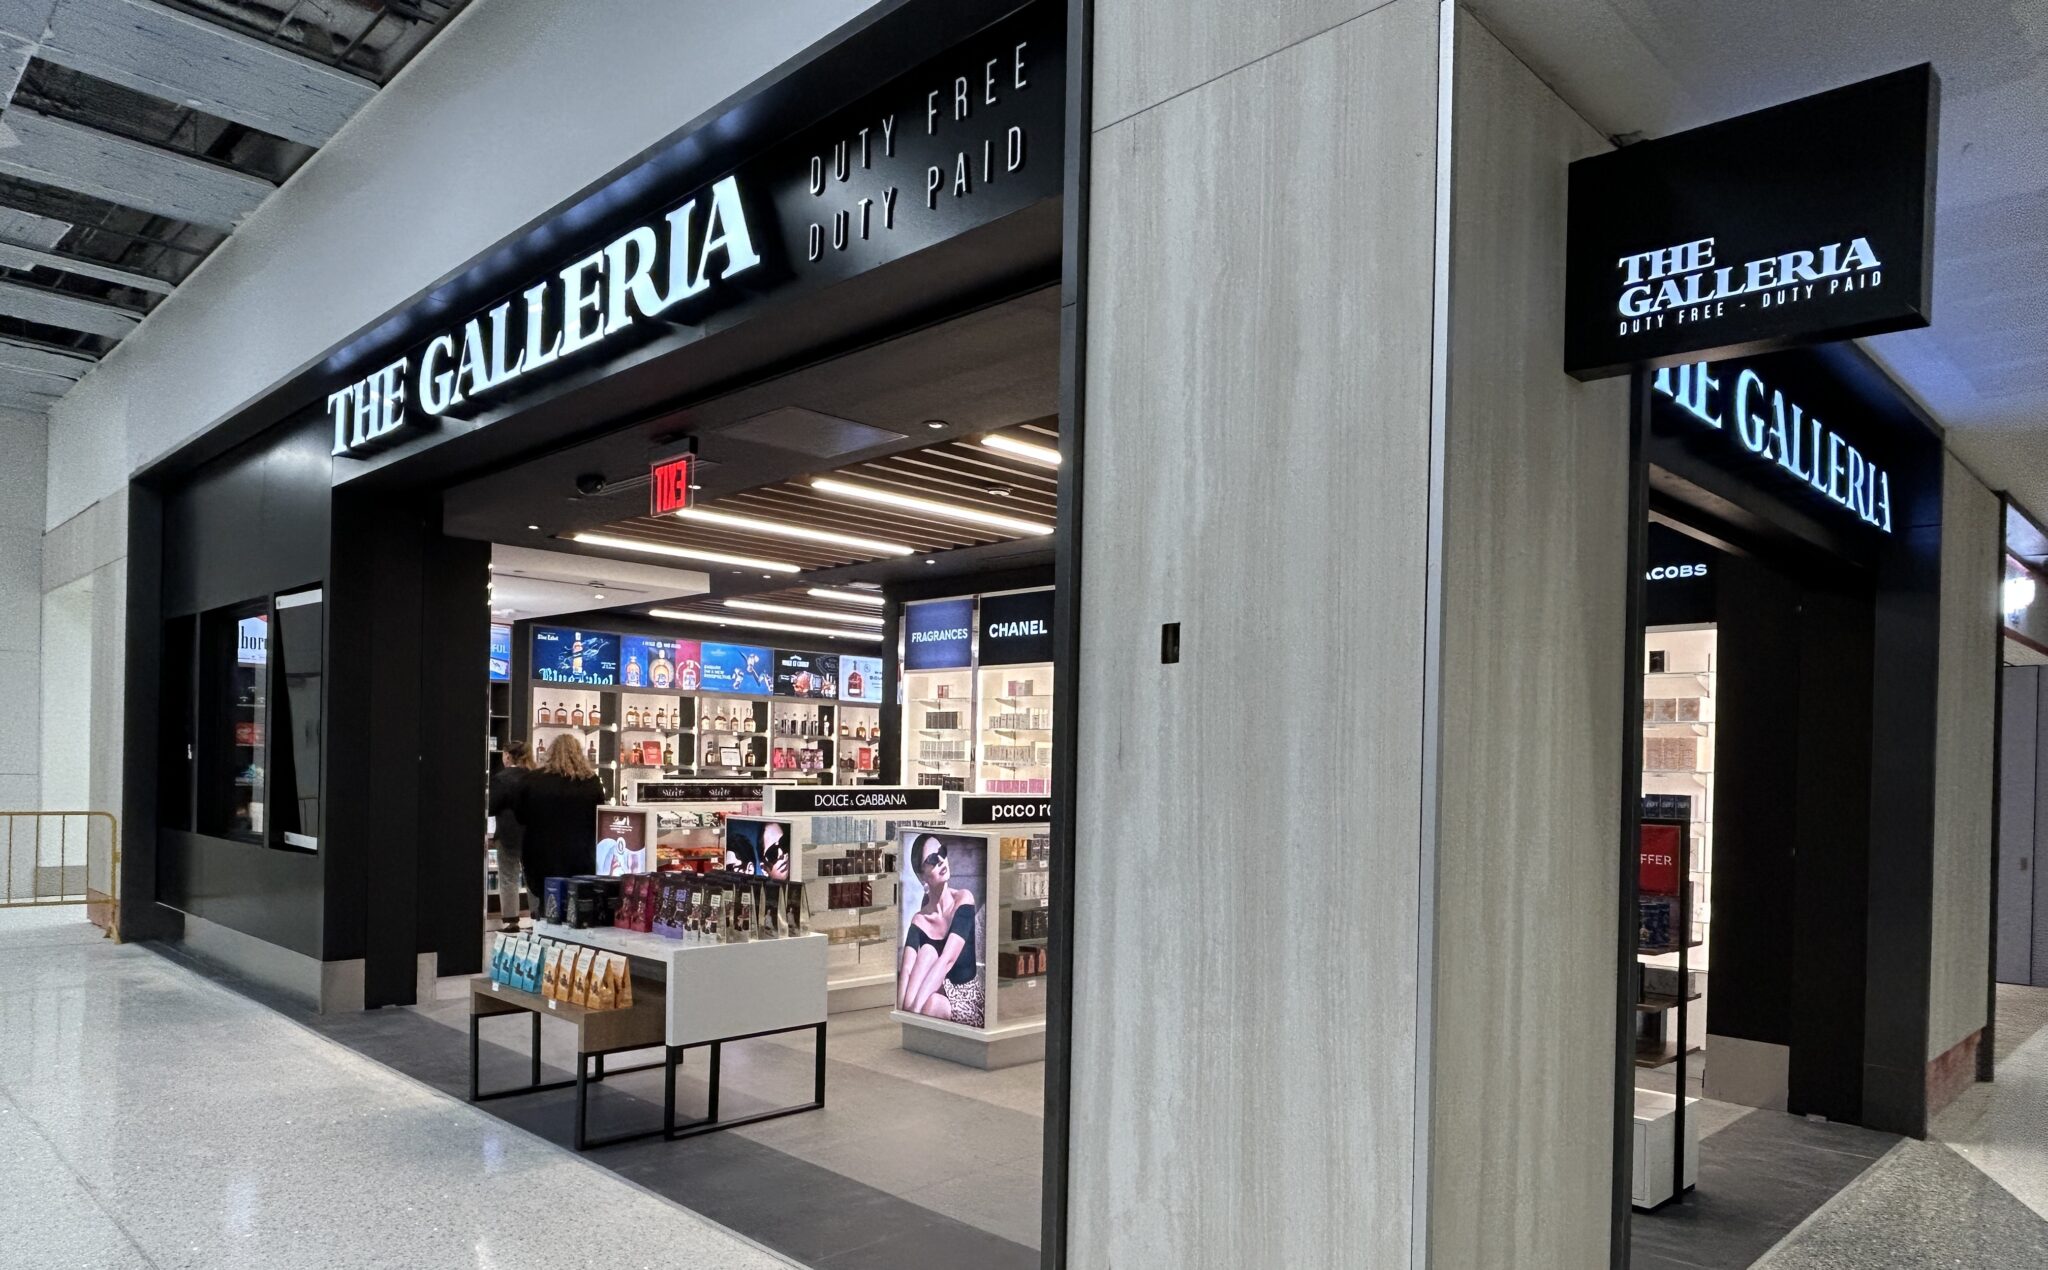 The Galleria Duty Free – Duty Paid